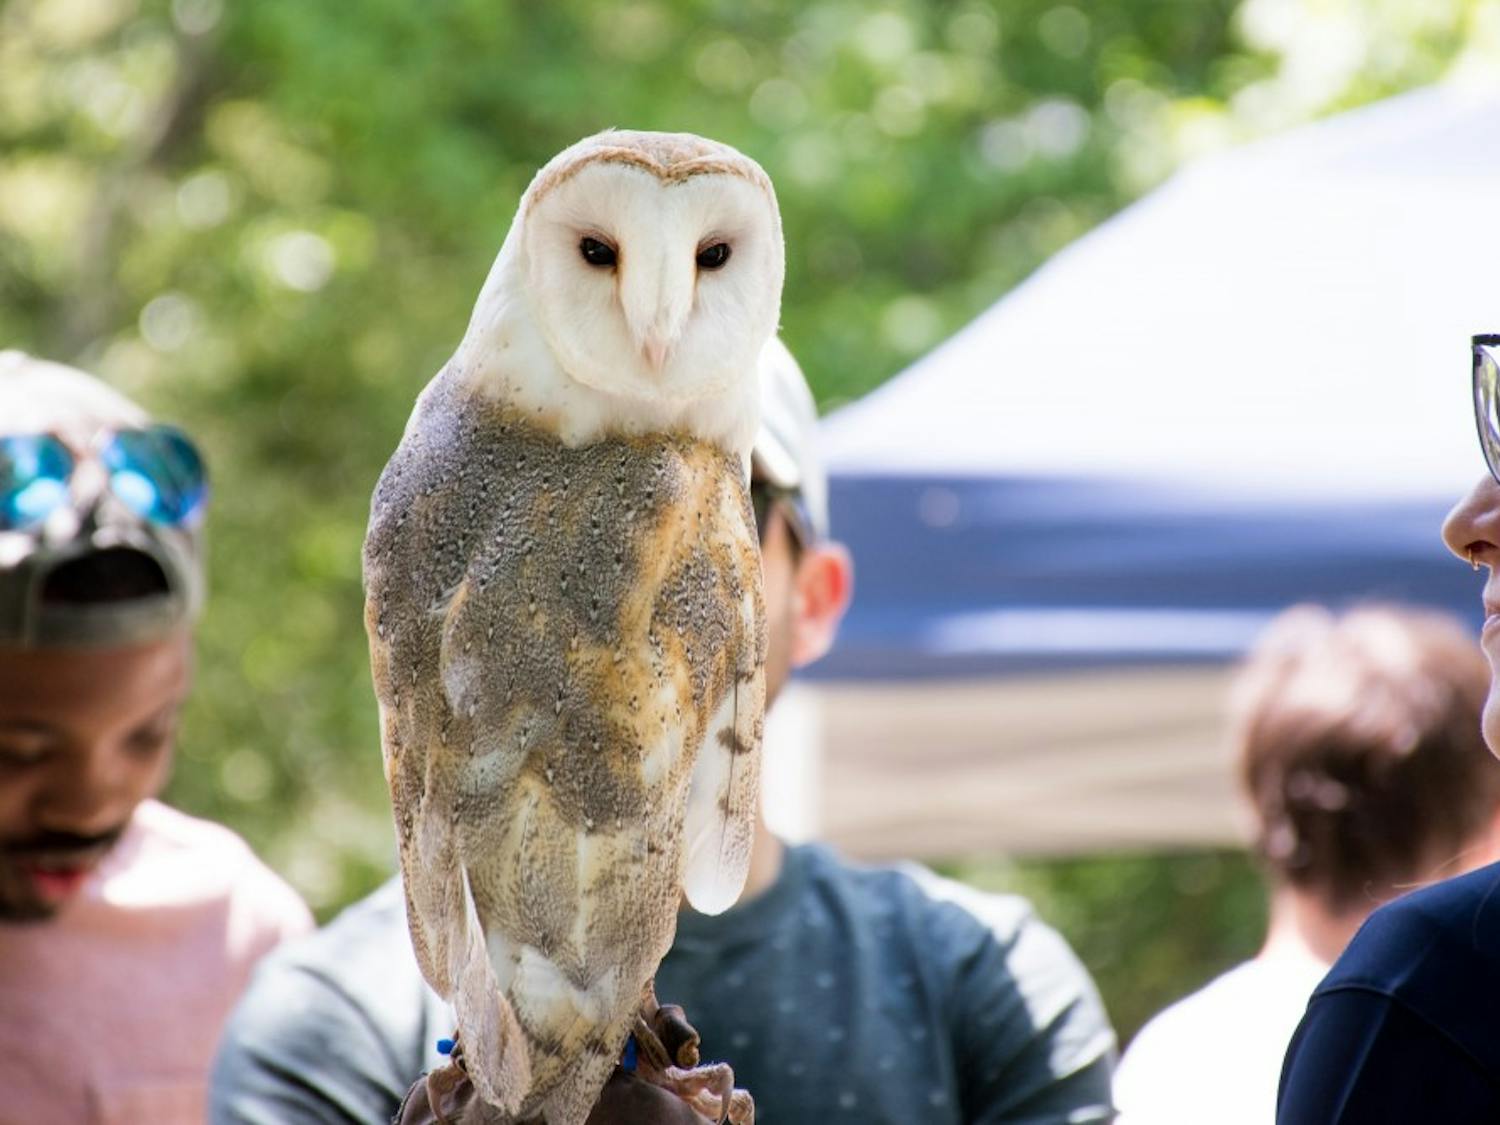 The Southeastern Raptor Center brings an owl to Auburn CityFest on Saturday, April 28, in Auburn, Ala.